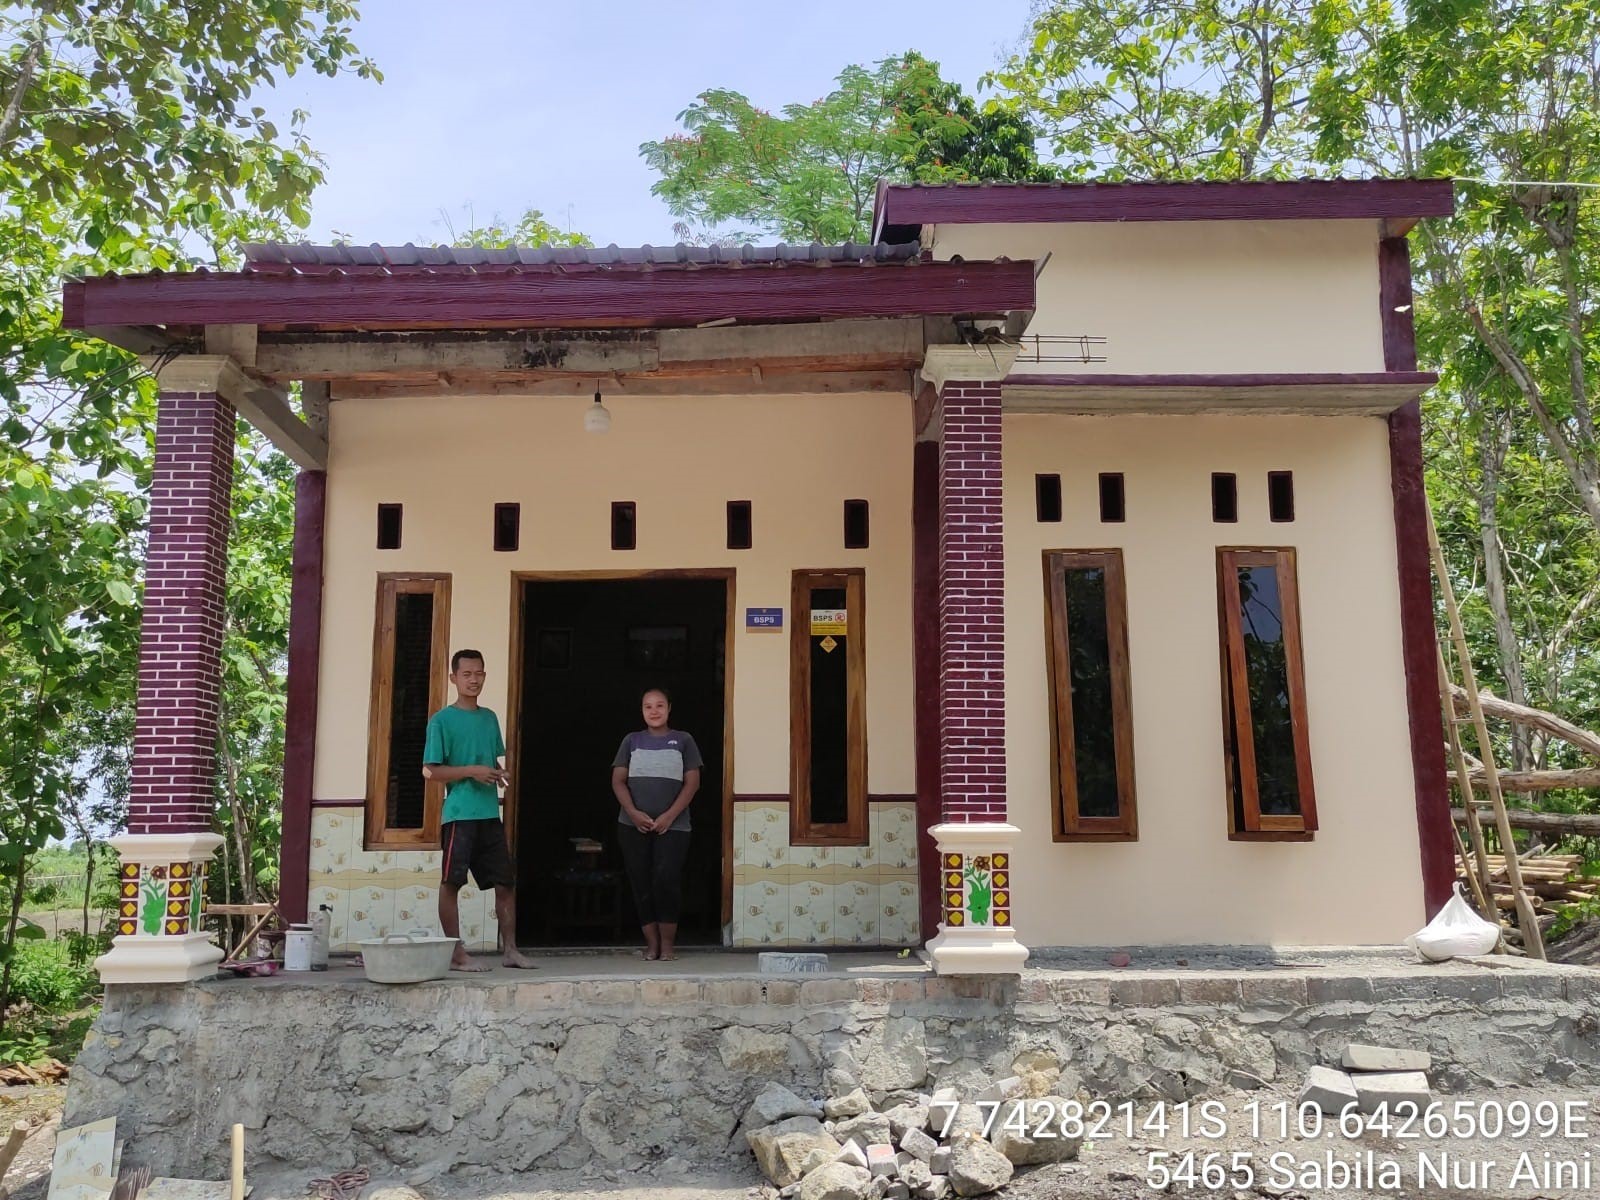 Rumah Swadaya untuk Masyarakat dalam Program Bantuan Stimulan Perumahan Swadaya (BSPS) di Jawa Tengah, Bagaimana Perwujudannya?